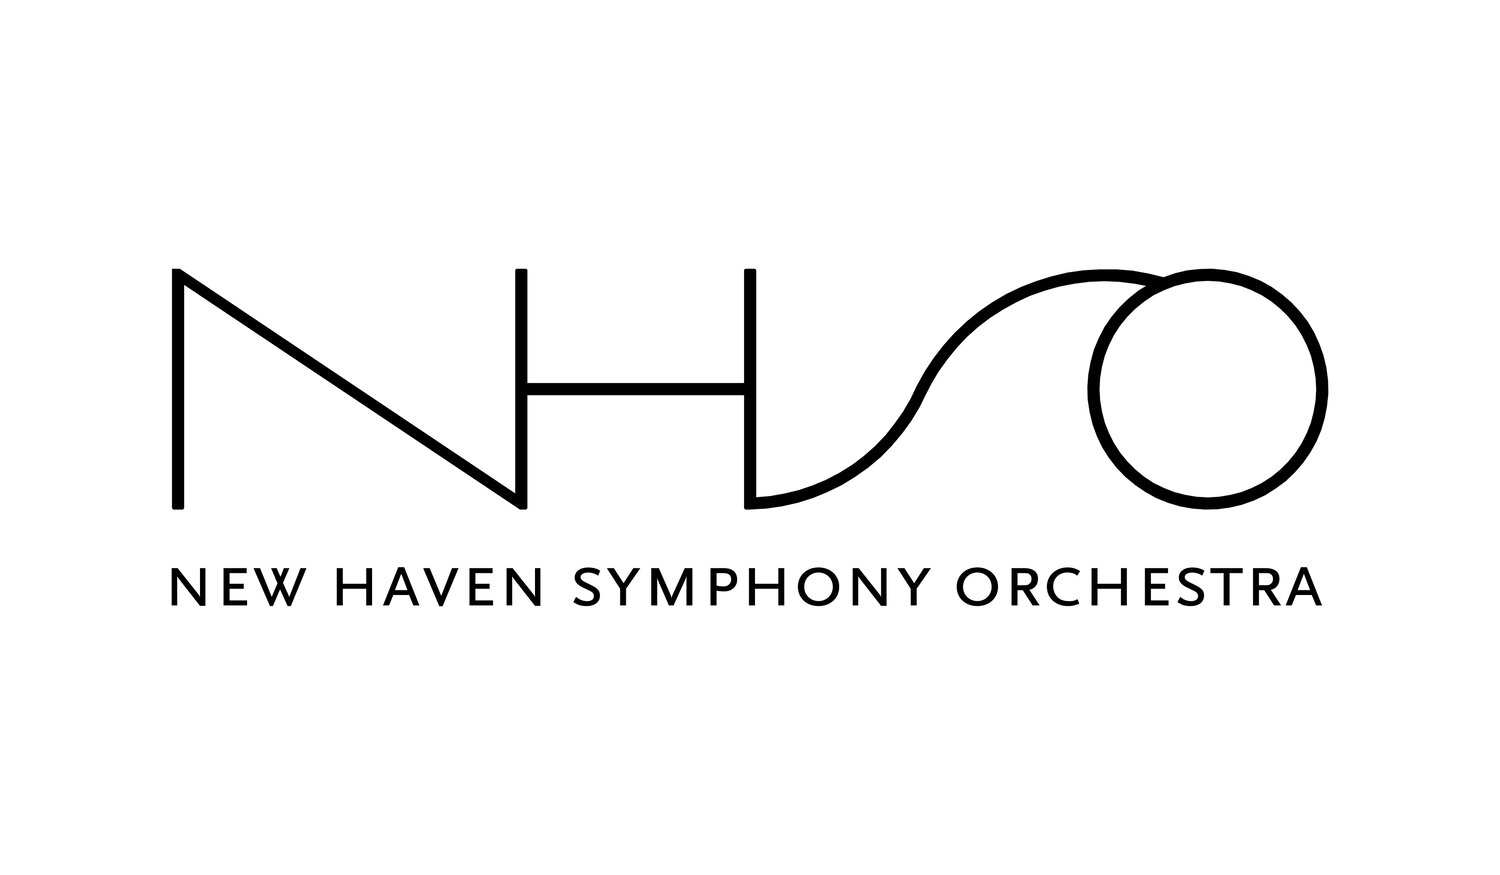 New Haven Symphony Orchestra Logo - https://newhavensymphony.org/